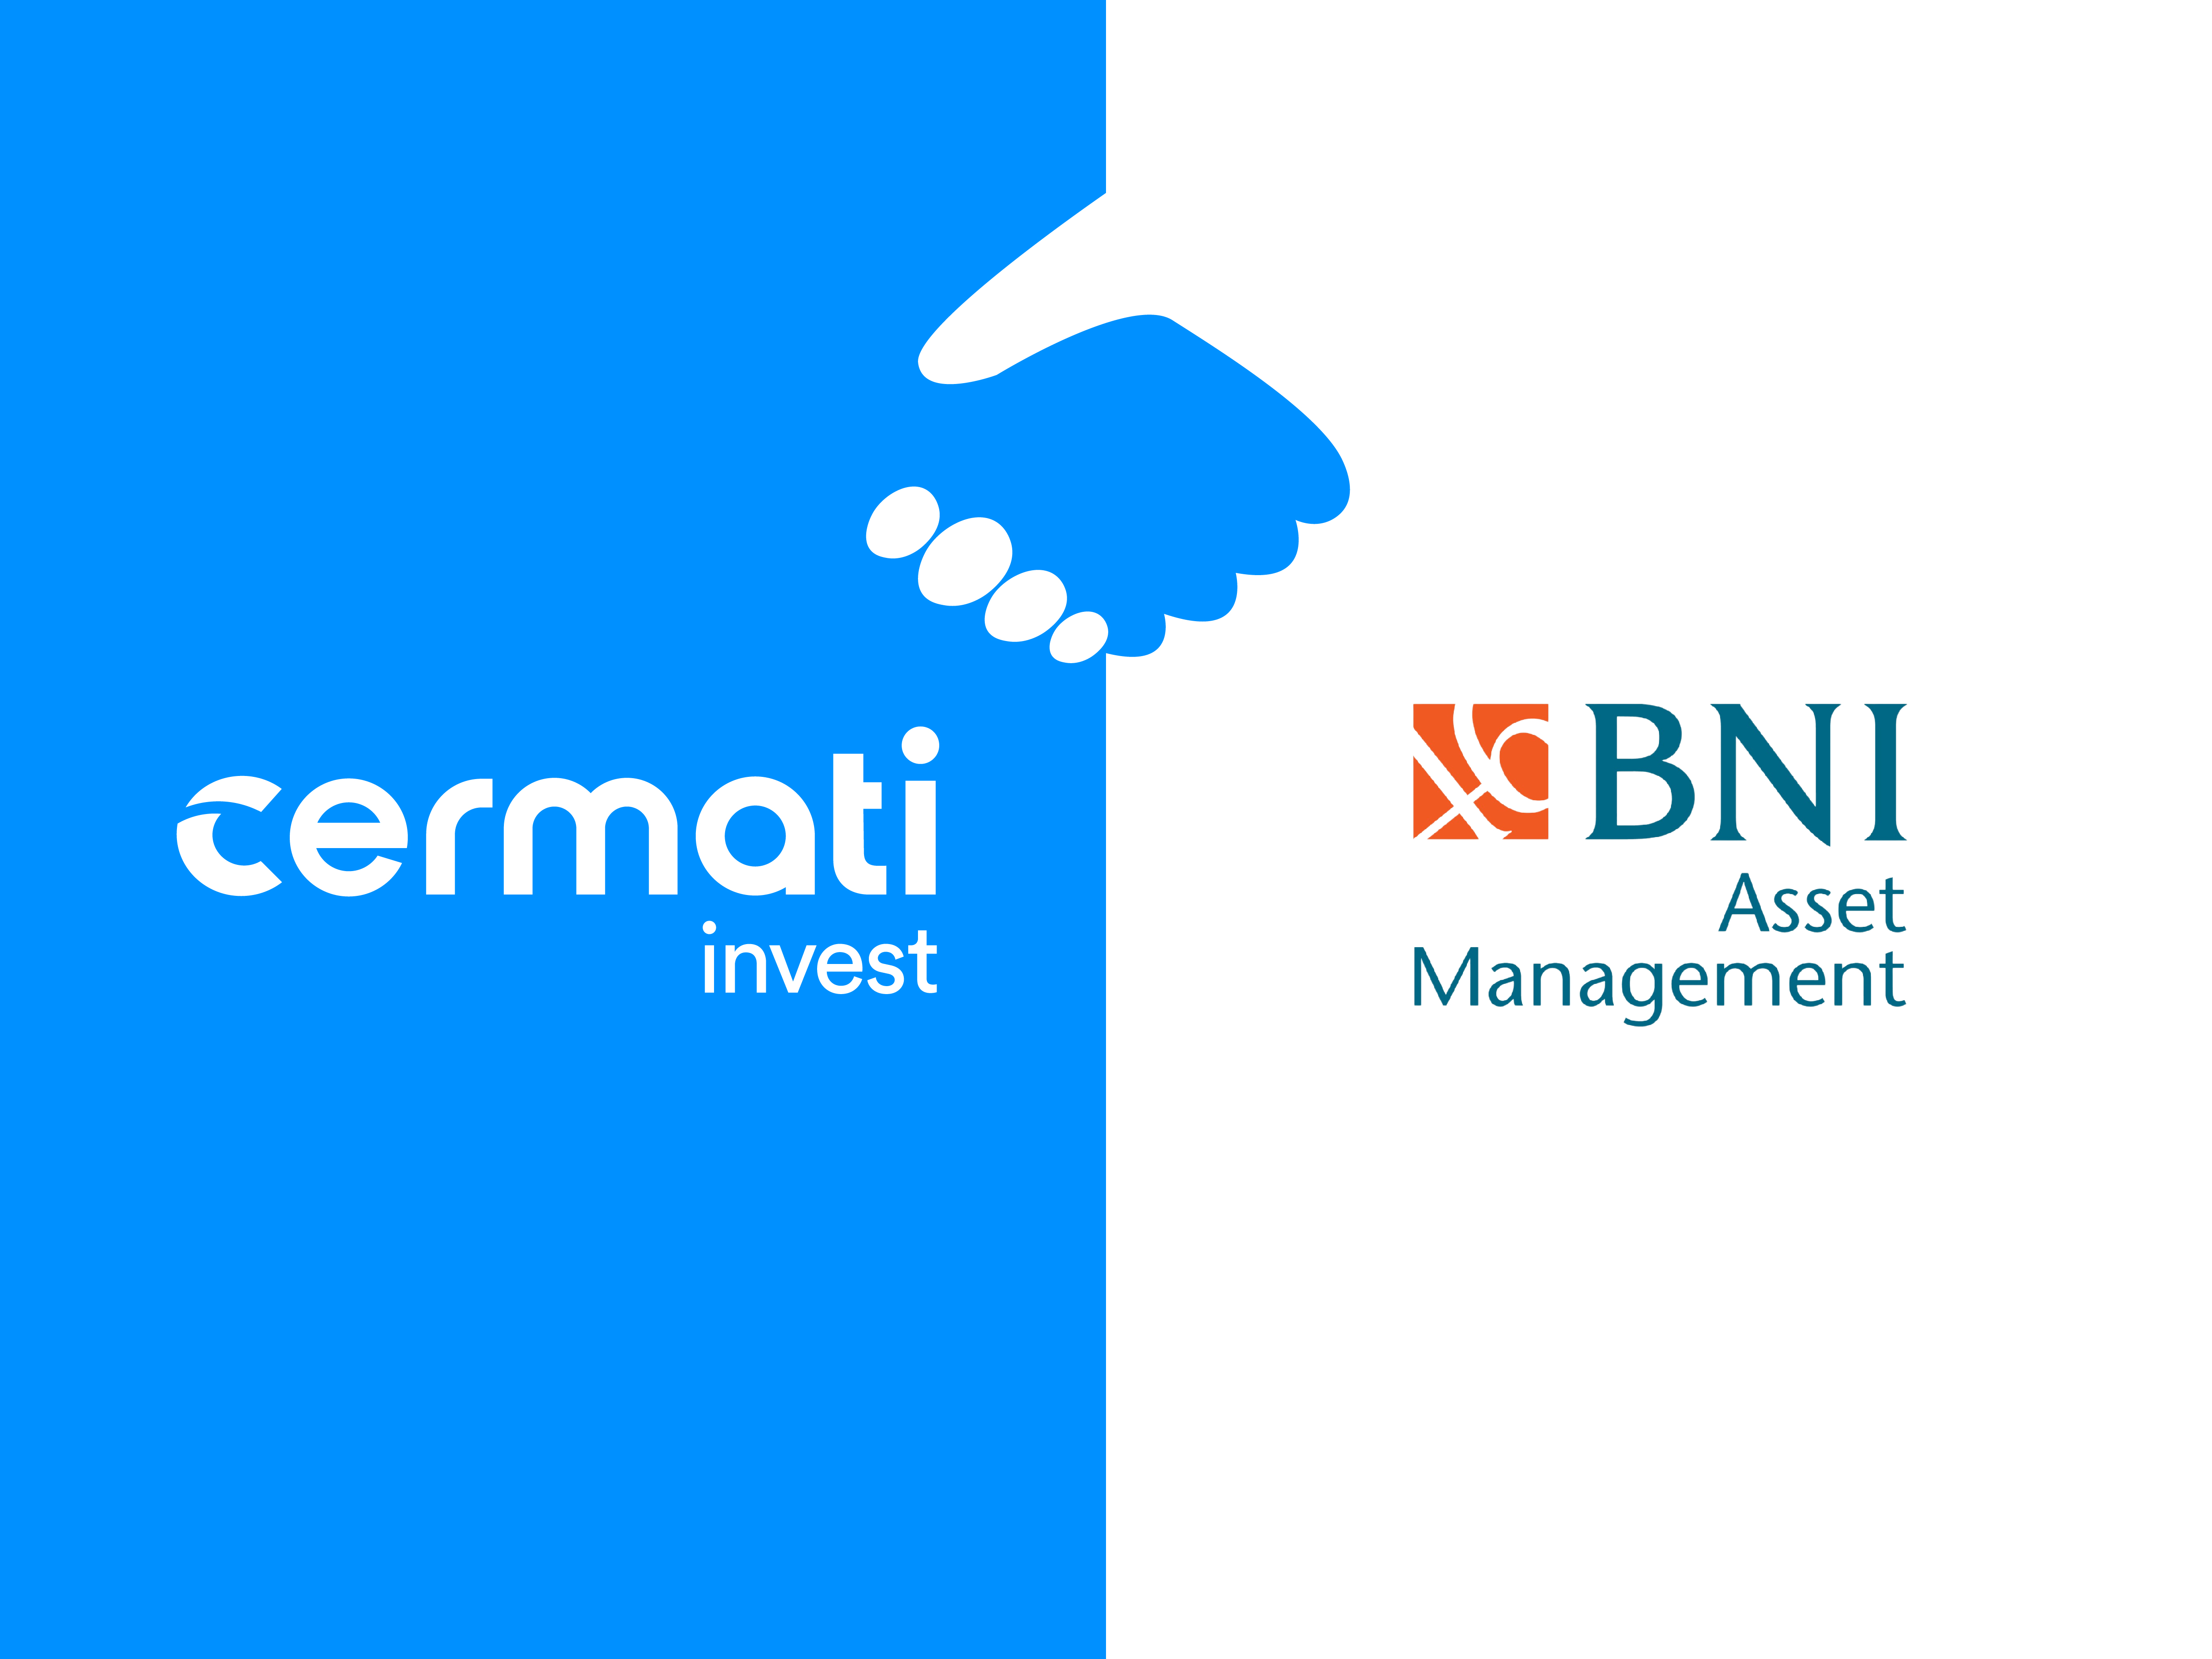 Bidik Nasabah Ritel, Cermati Invest Gandeng BNI Asset Management